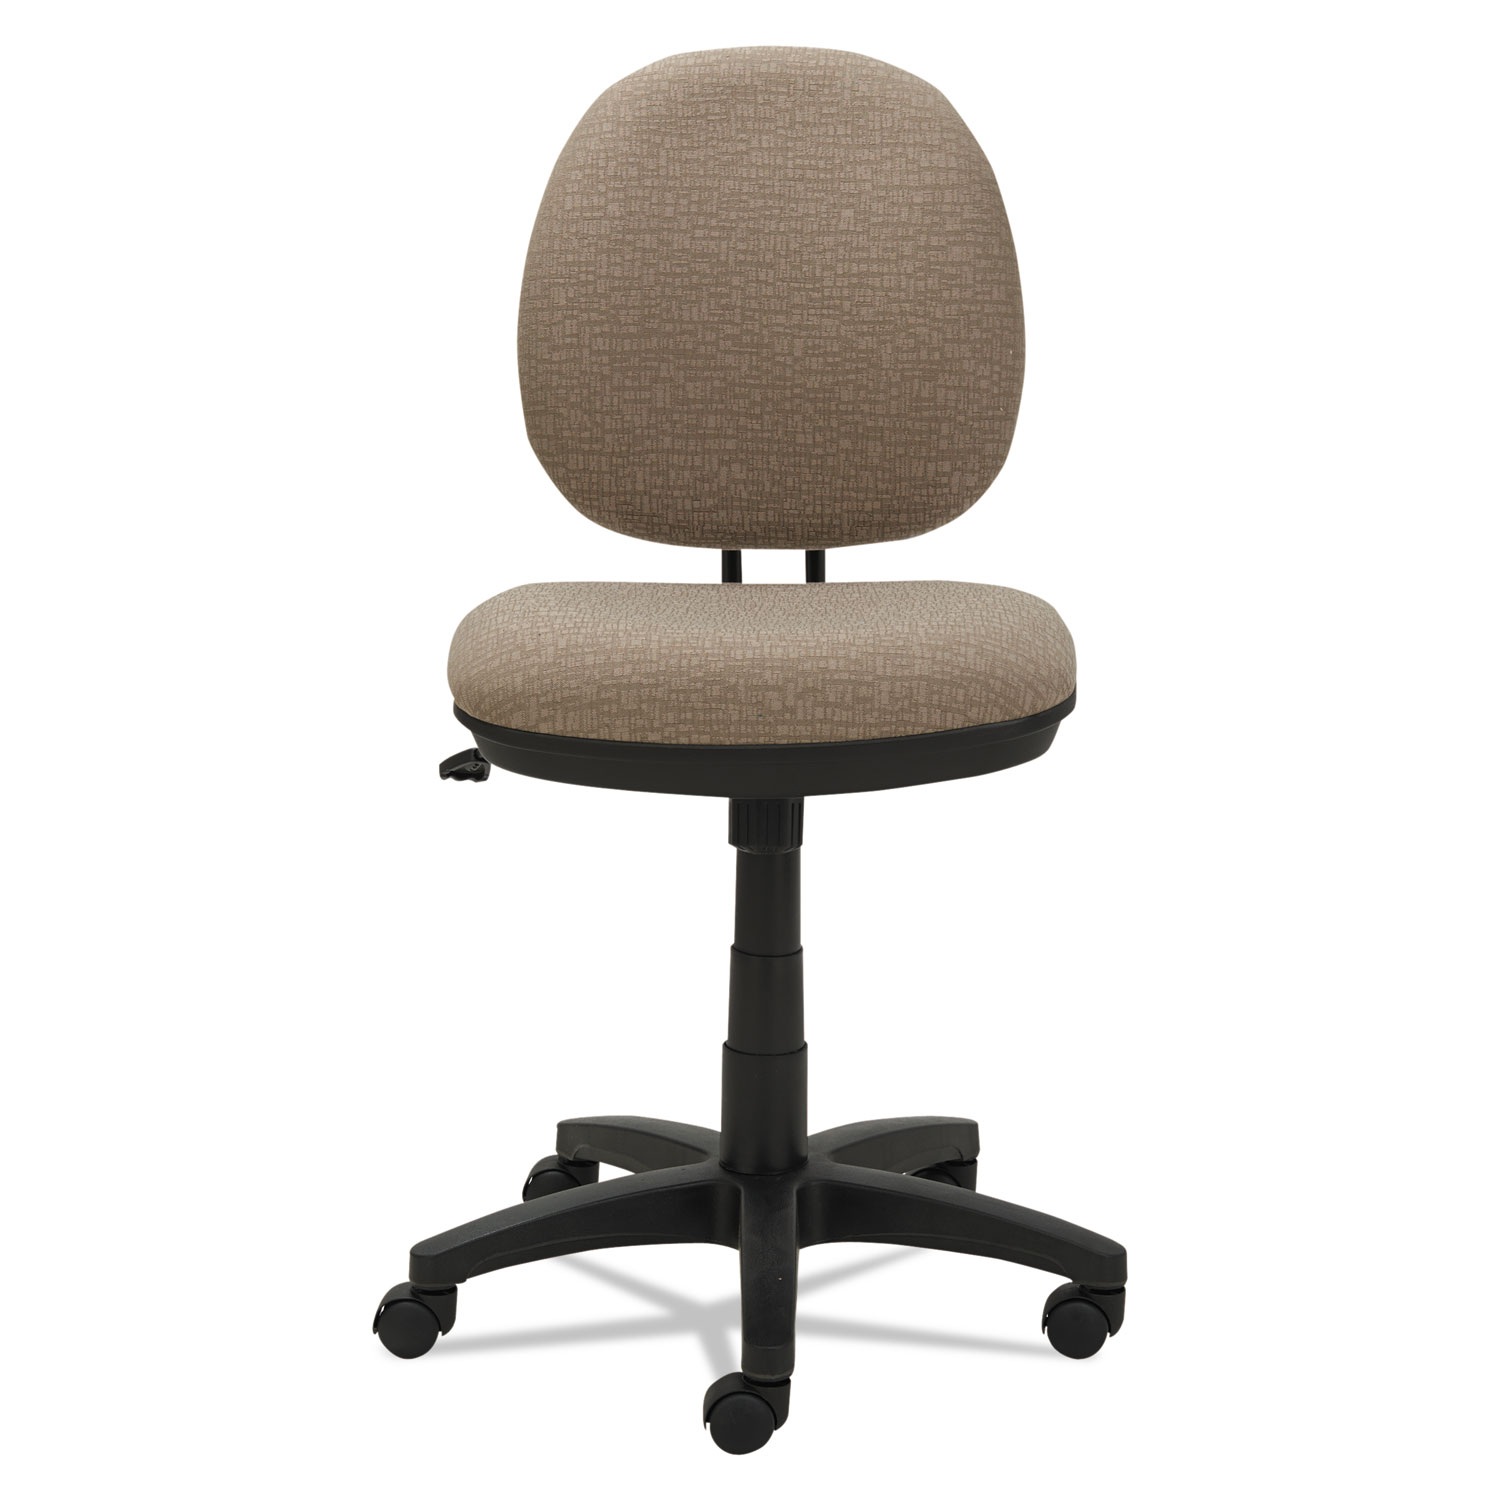 Alera Interval Series Swivel/Tilt Task Chair, Sandstone Tan Fabric